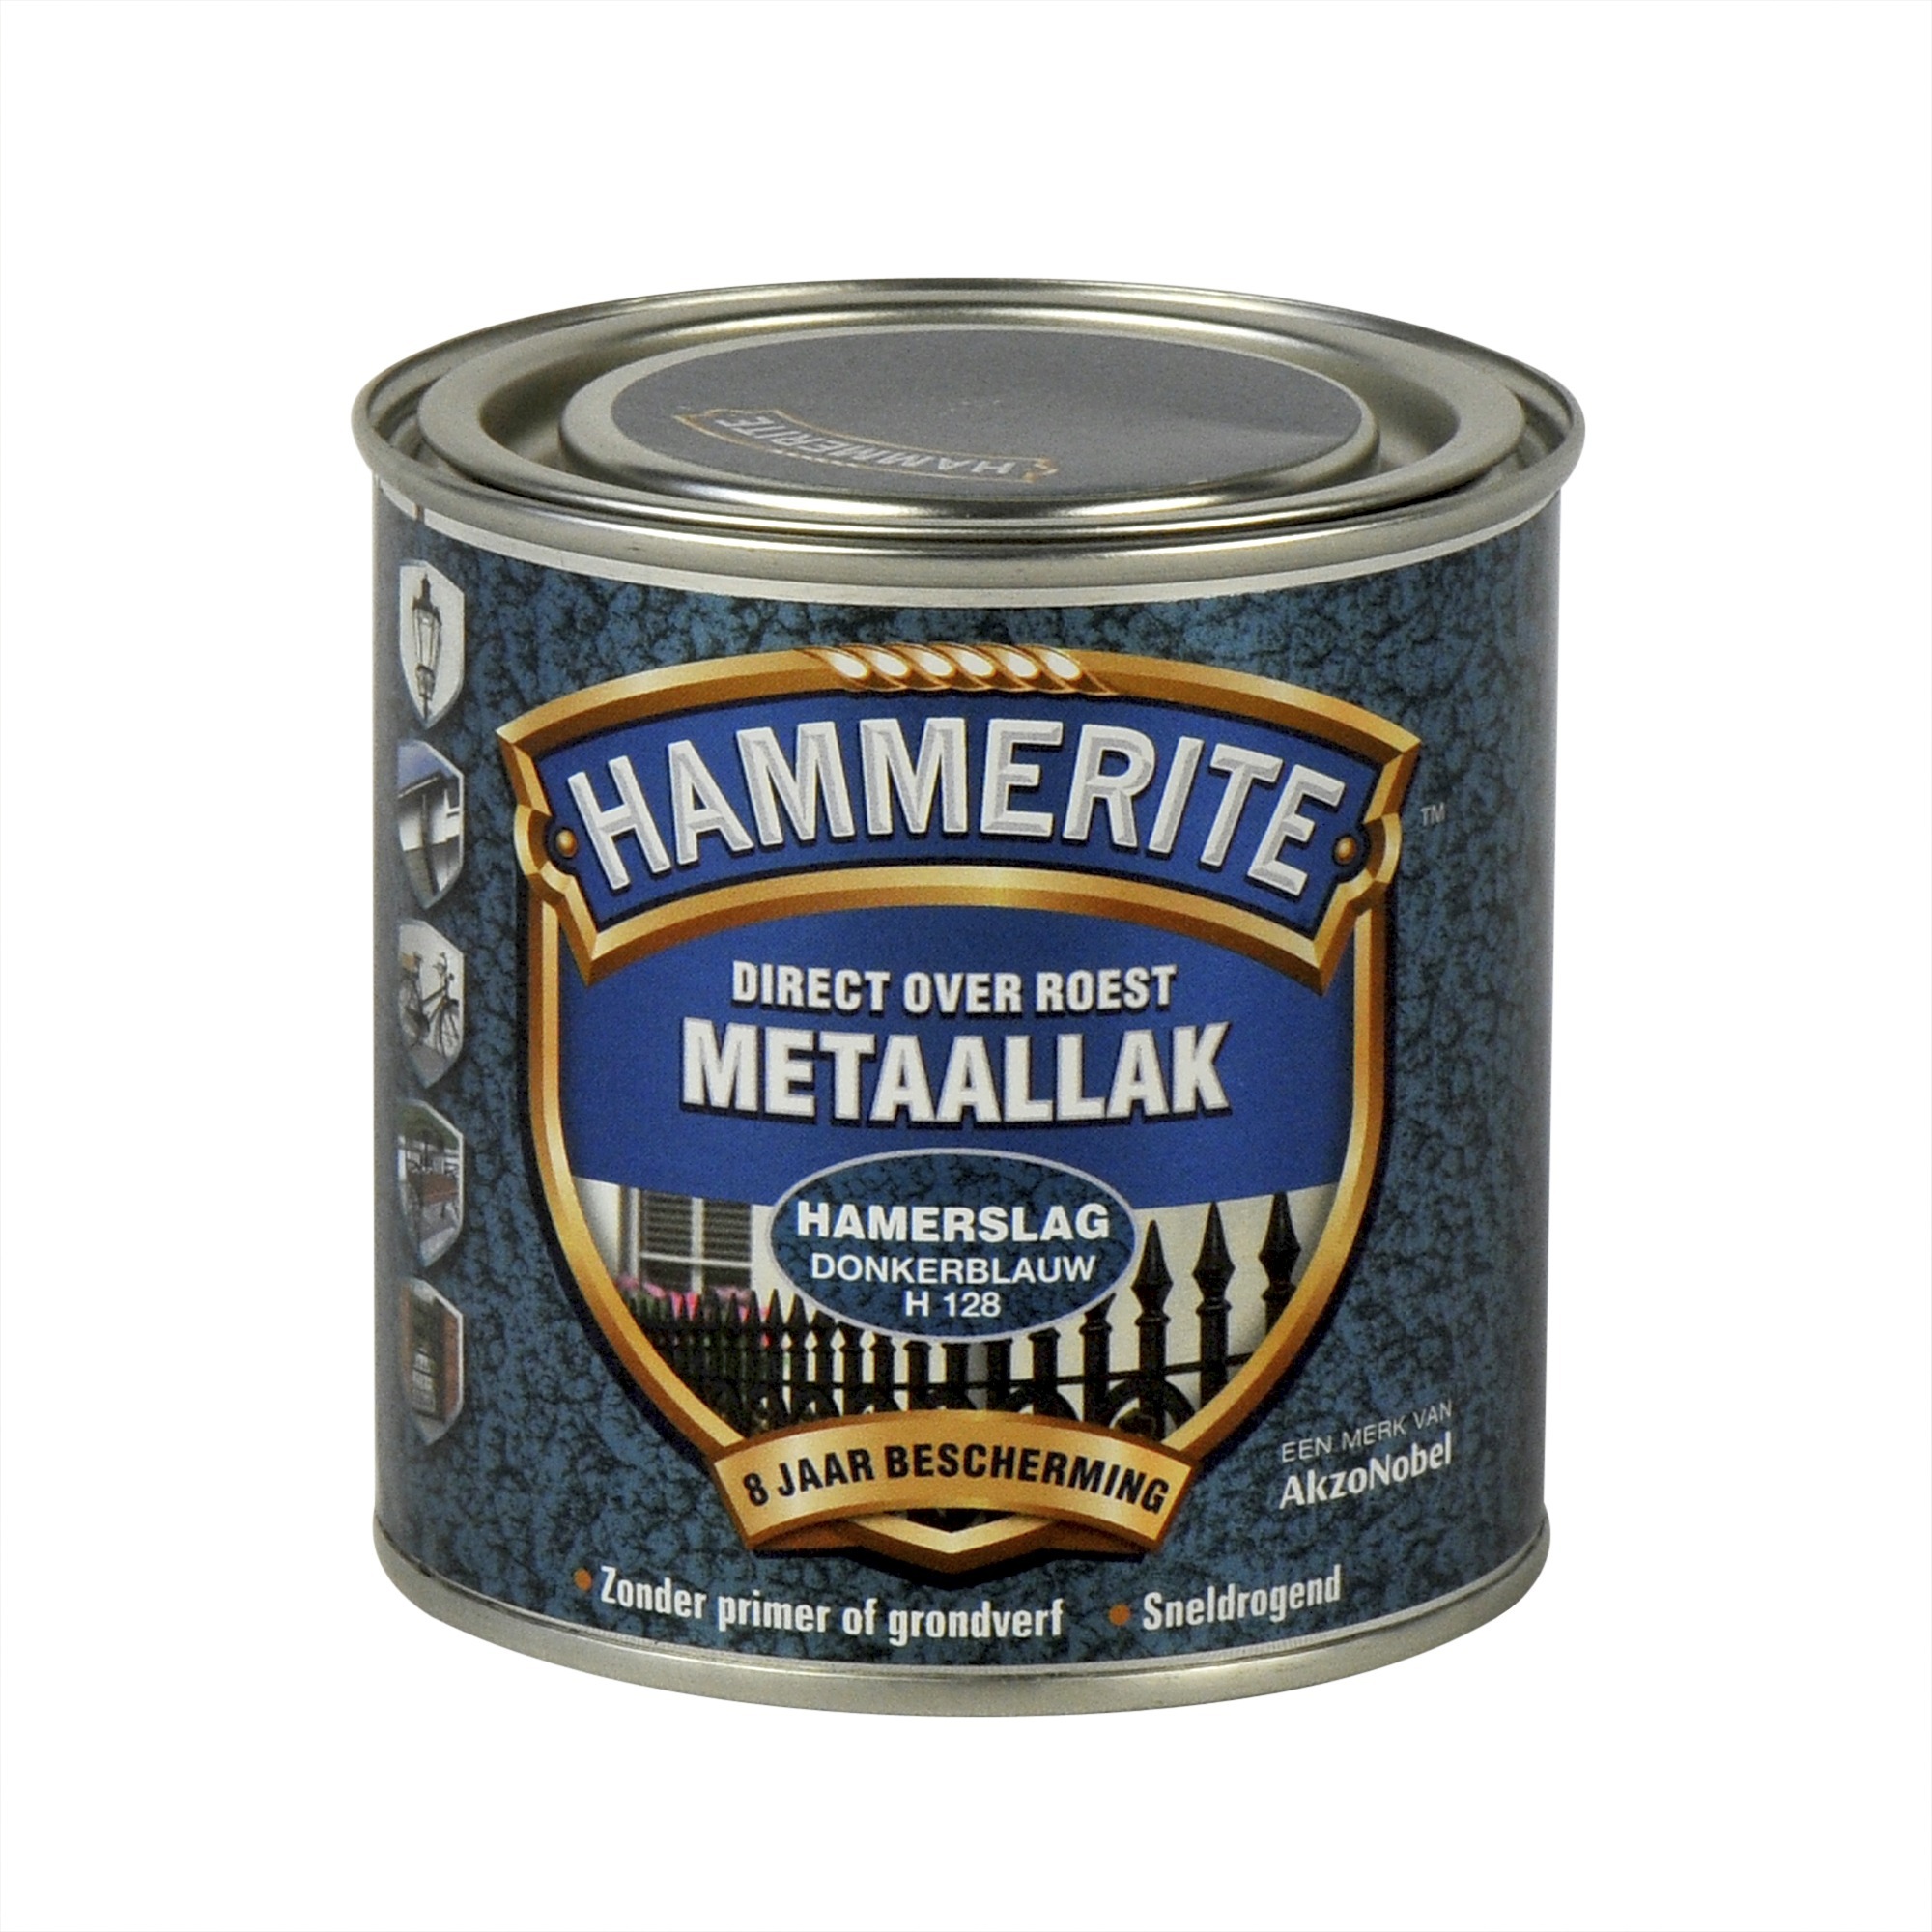 Hammerite direct over roest metaallak hamerslag donkerblauw - 250 ml